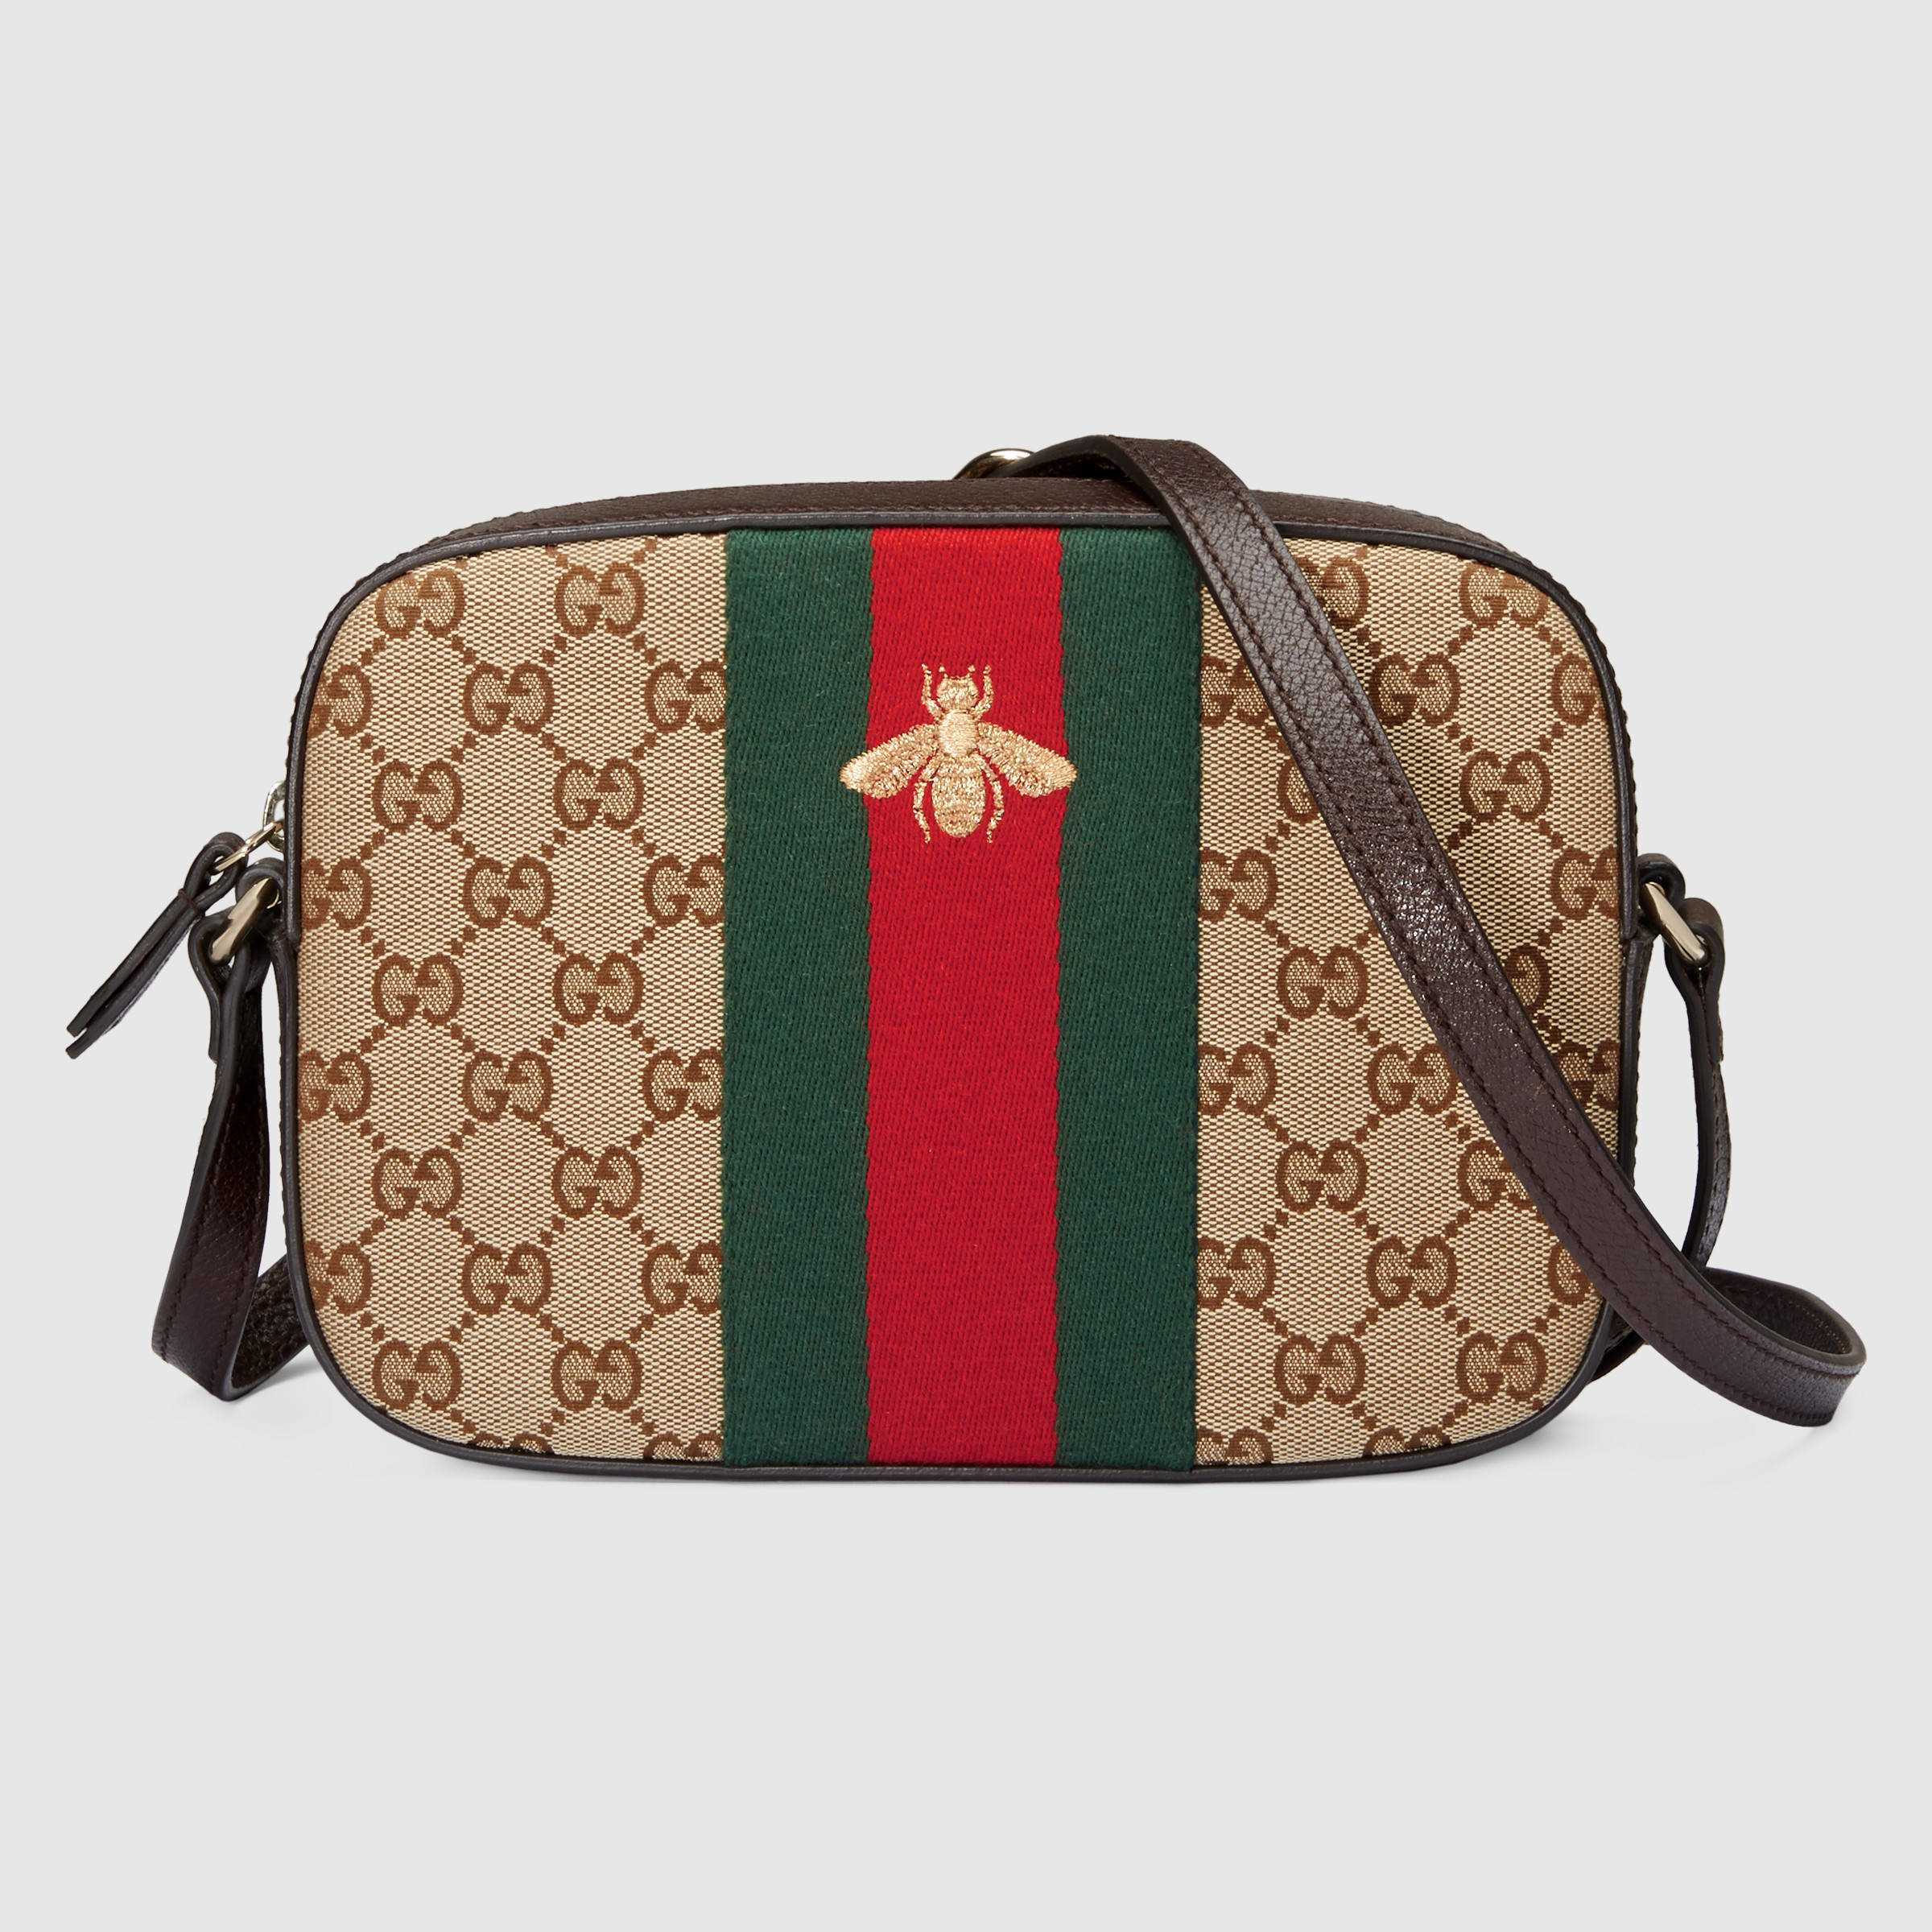 Gucci Original GG Supreme Shoulder Bag in Brown | Lyst